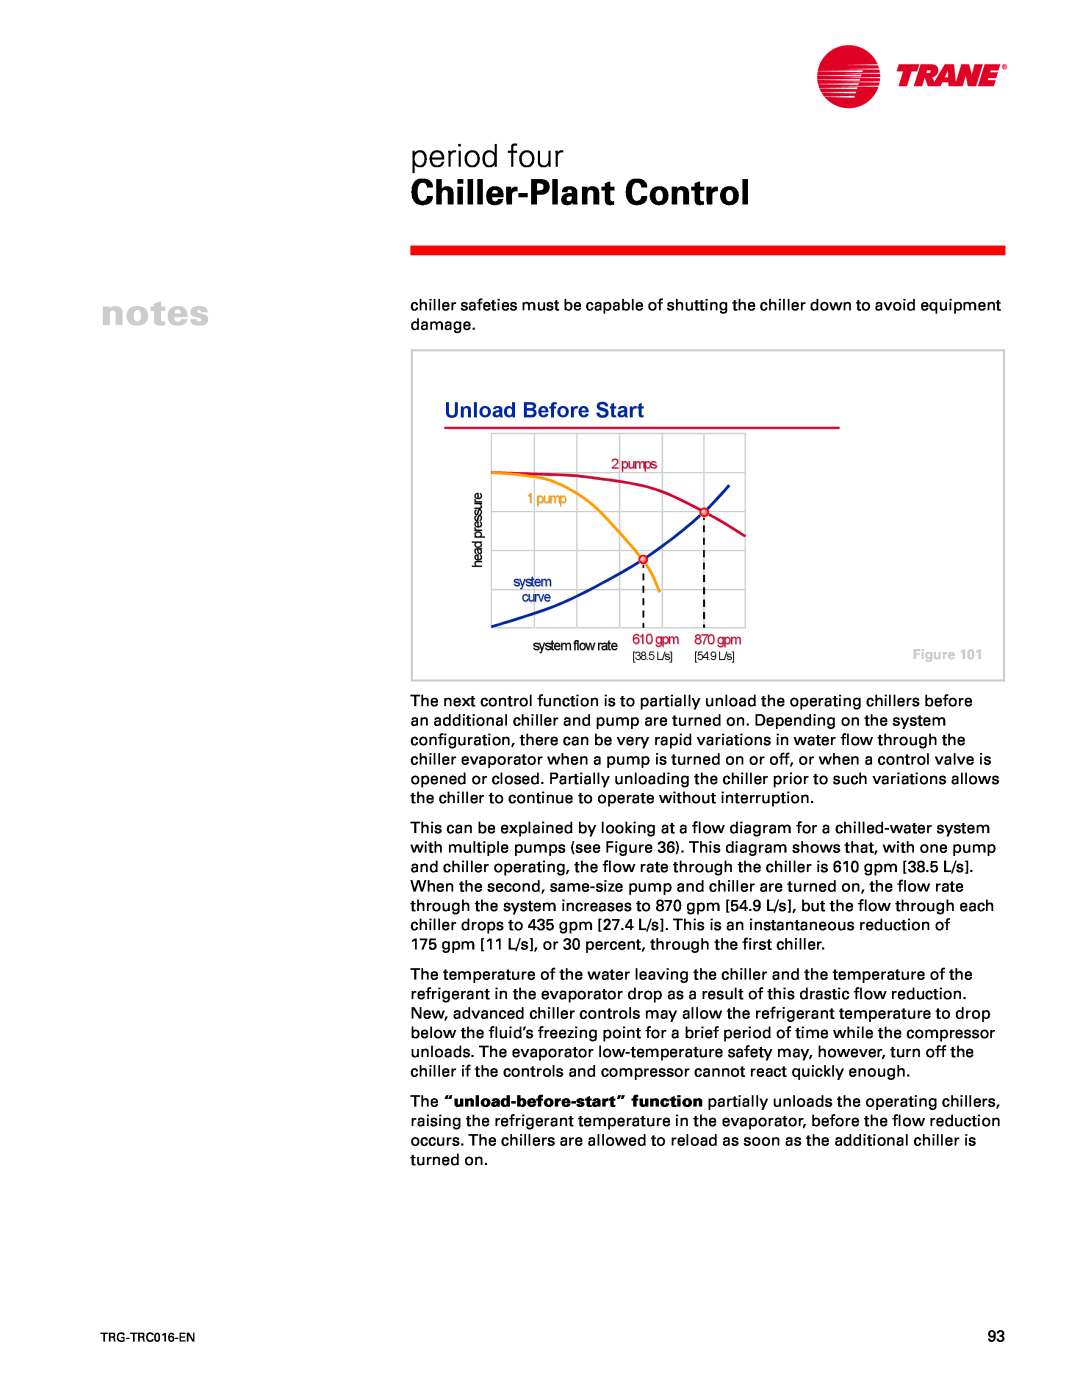 Trane TRG-TRC016-EN manual Unload Before Start, notes, Chiller-PlantControl, period four 